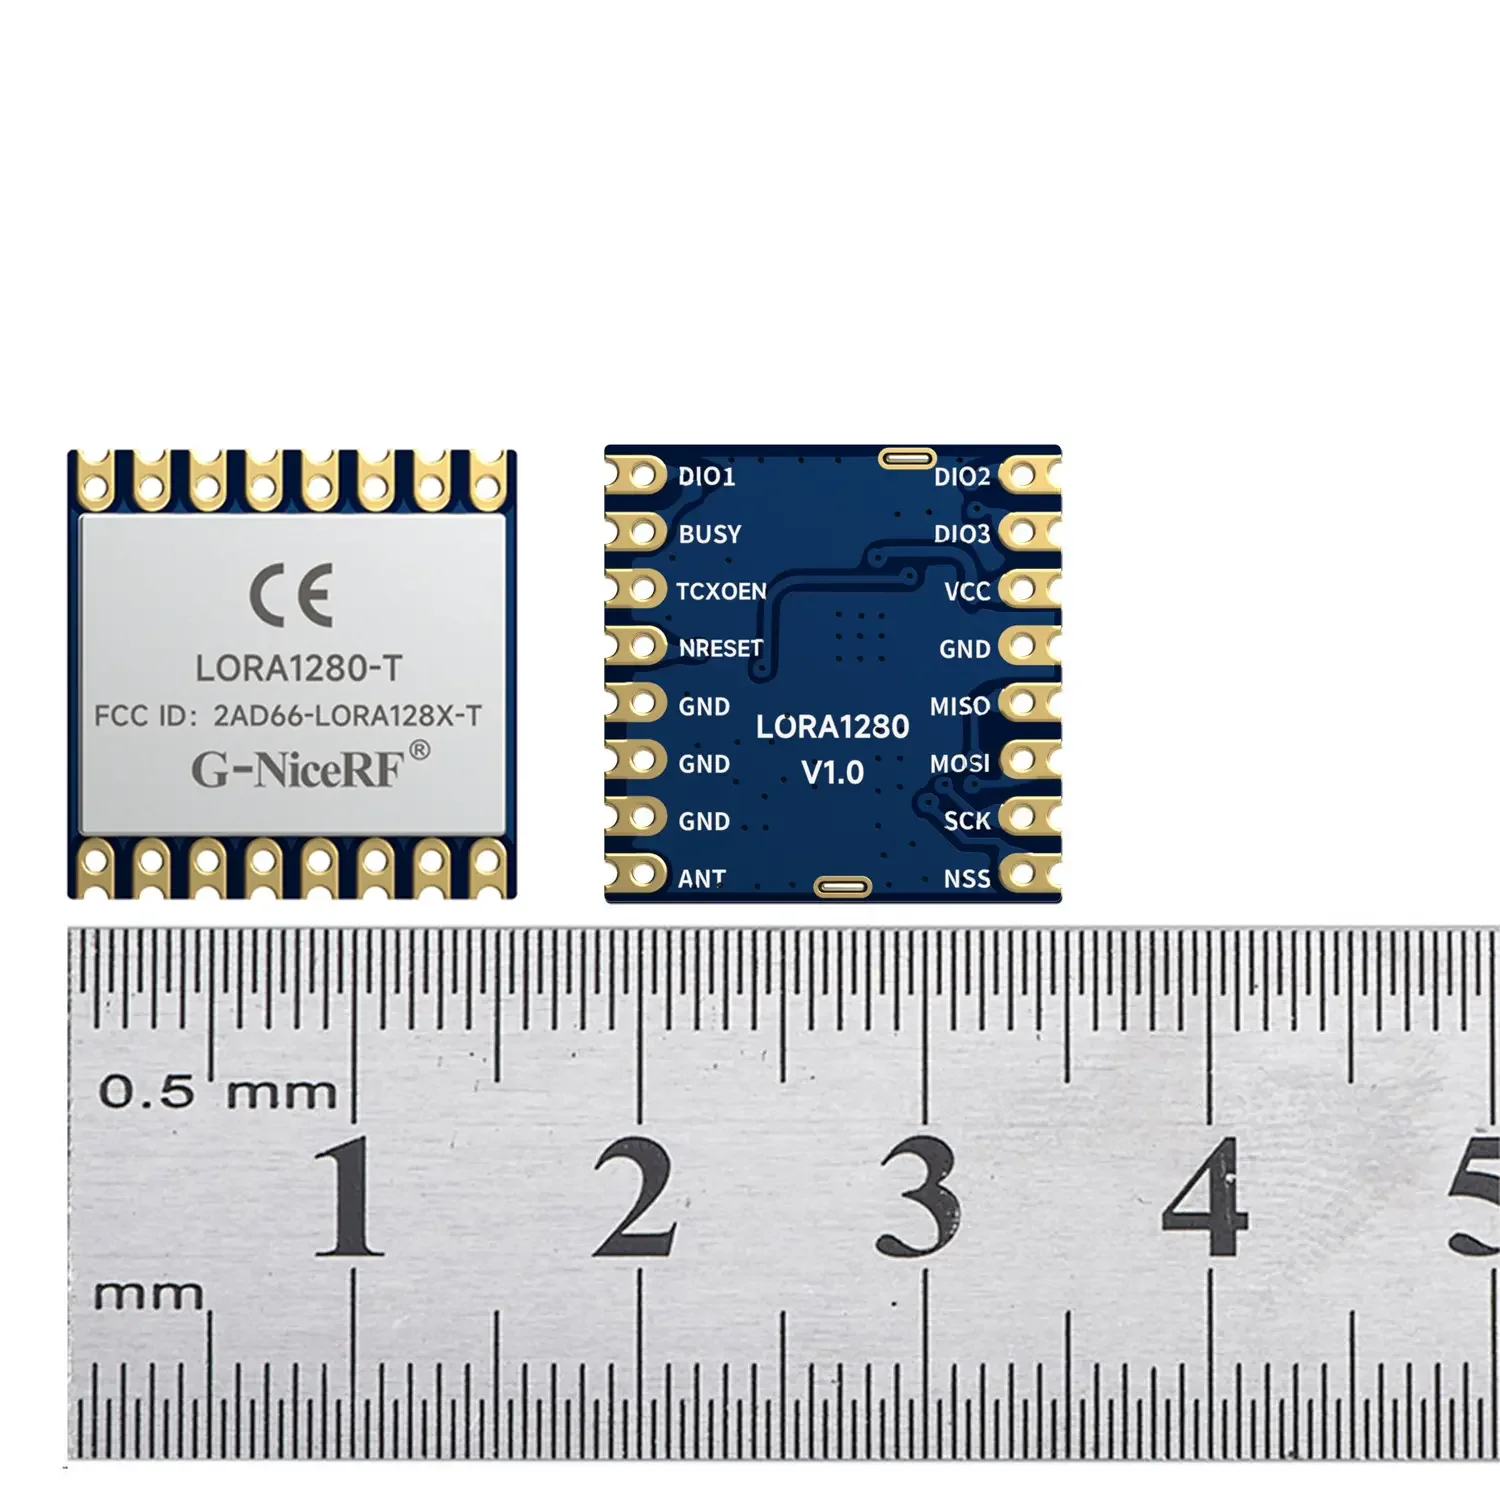 LoRa128X-T : SX1280/SX1281 2.4GHz FCC ID & CE-RED Certified TCXO Ranging Module